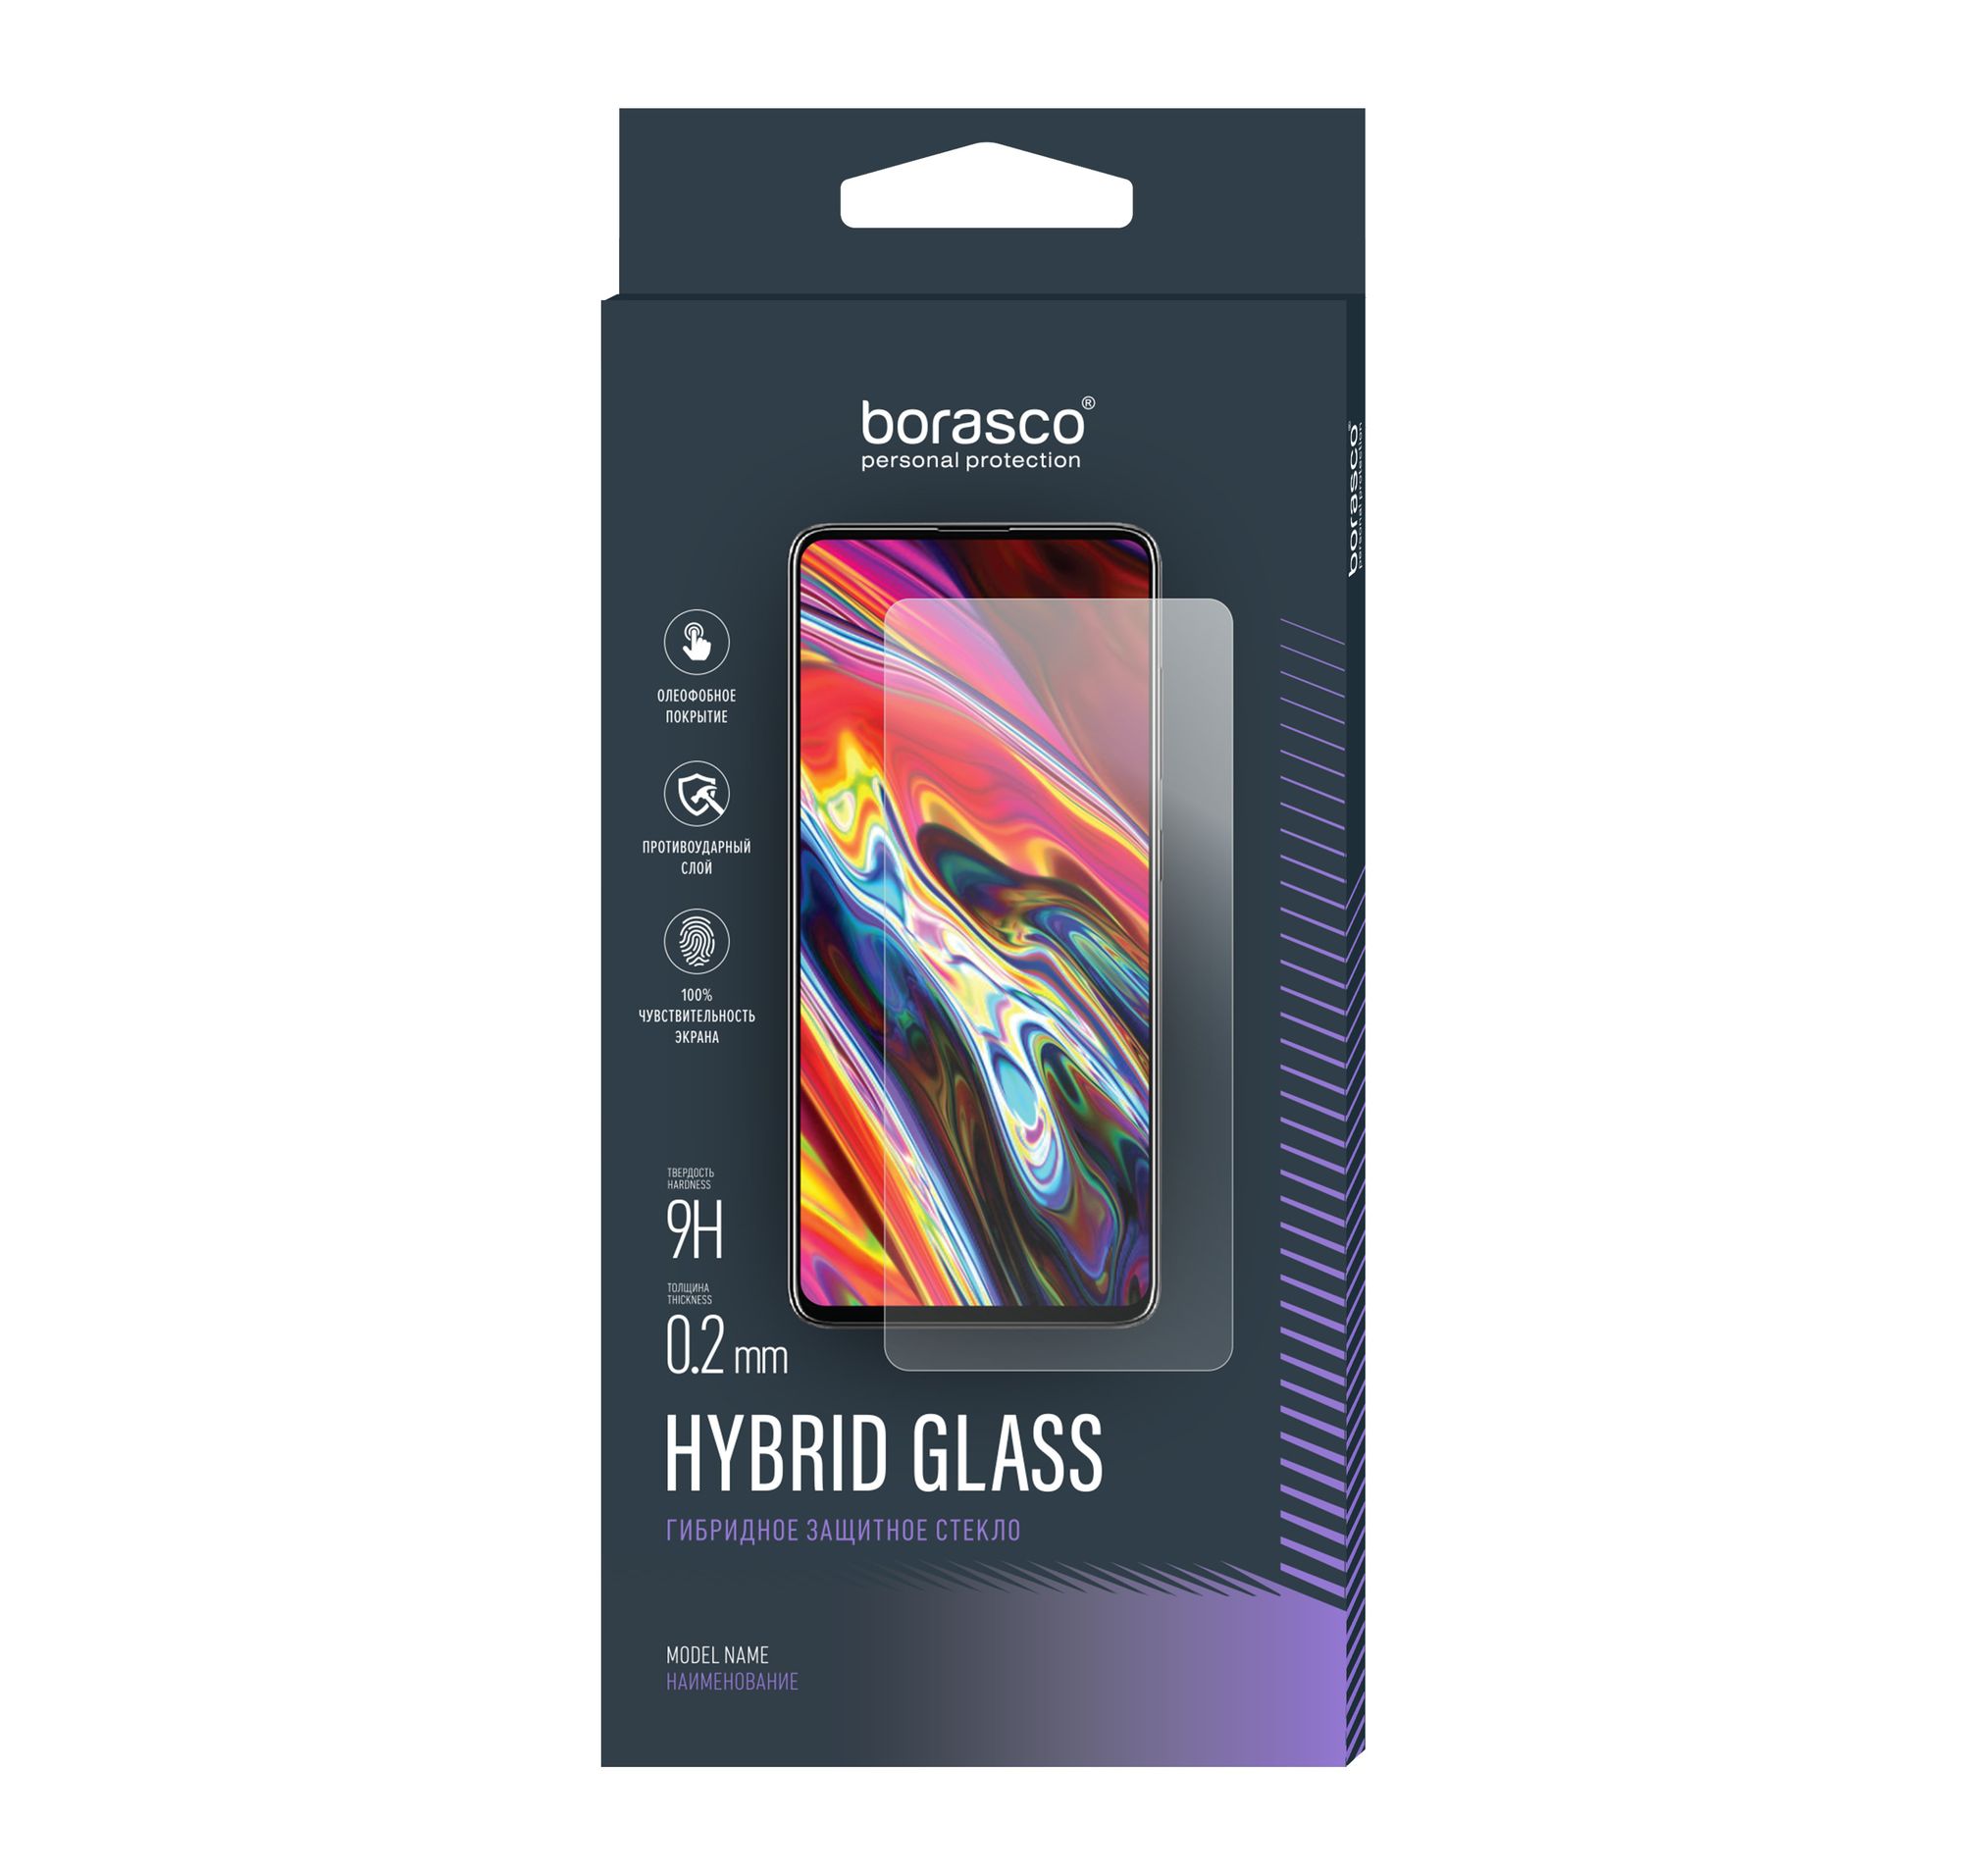 Стекло защитное Hybrid Glass VSP 0,26 мм для Sony Xperia XA1 Ultra Dual чехол флип pulsar shellcase для sony xperia c5 ultra dual белый